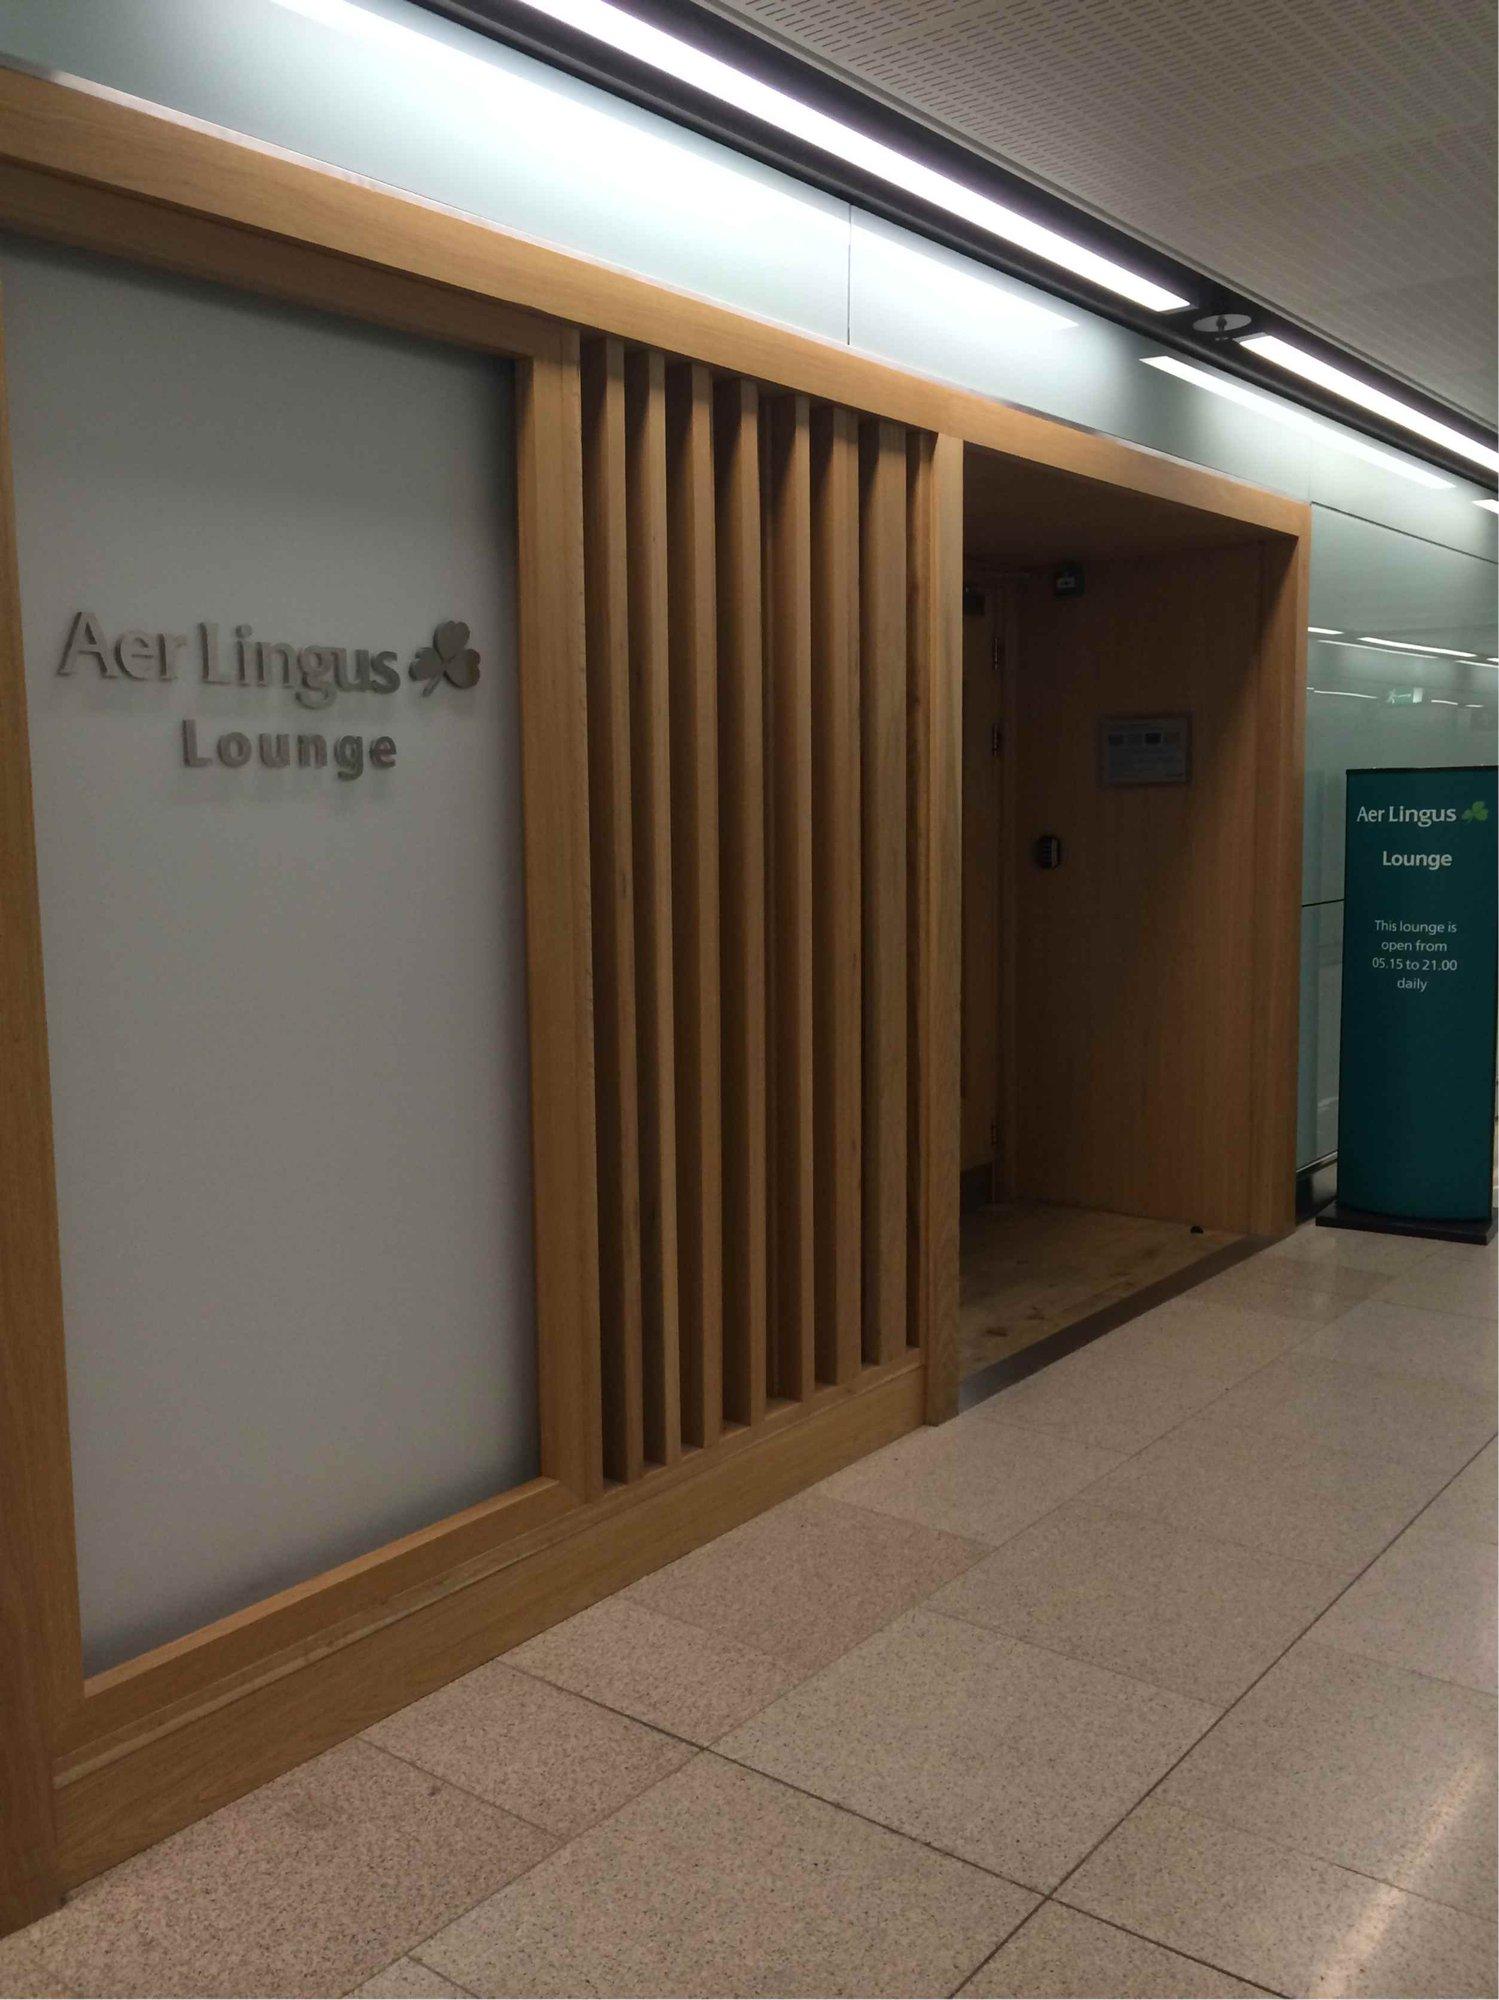 Aer Lingus Lounge image 9 of 10